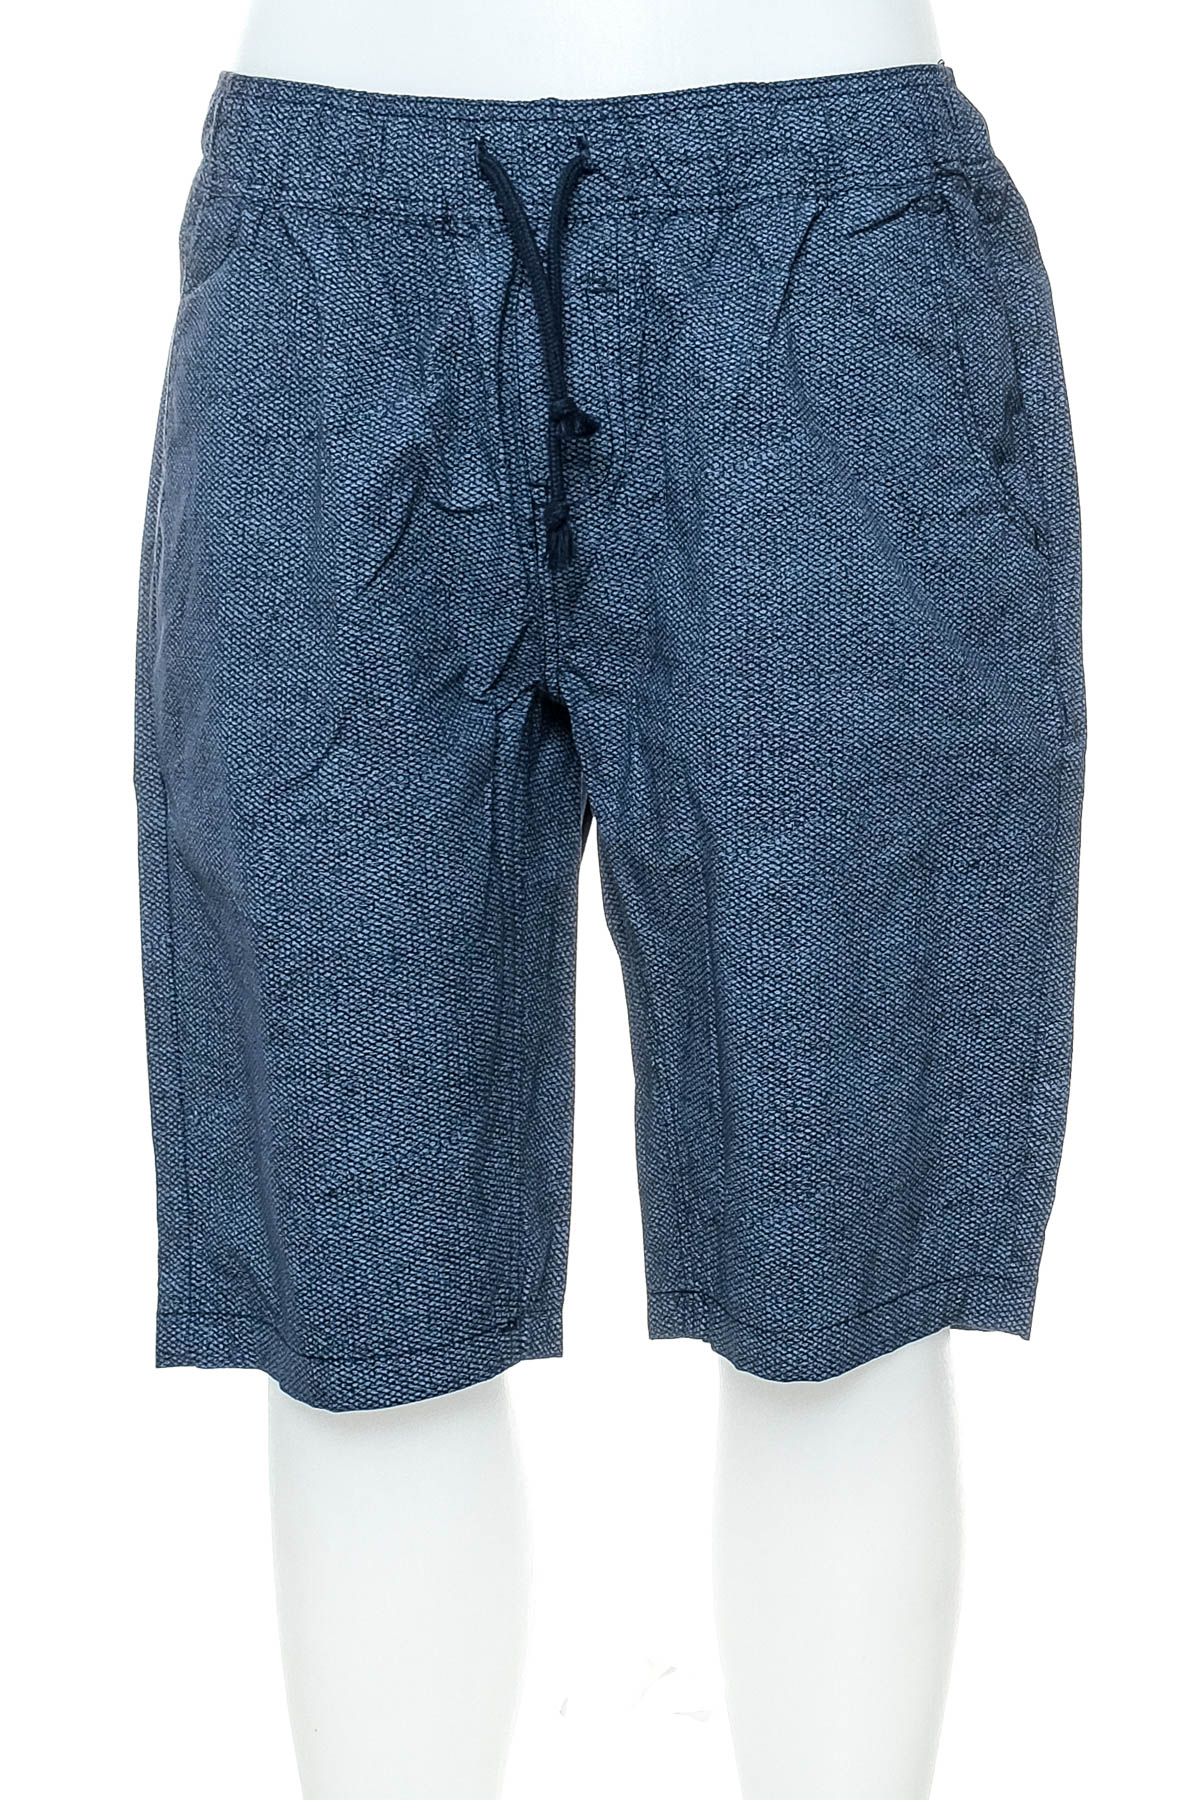 Men's shorts - Denim 1982 - 0